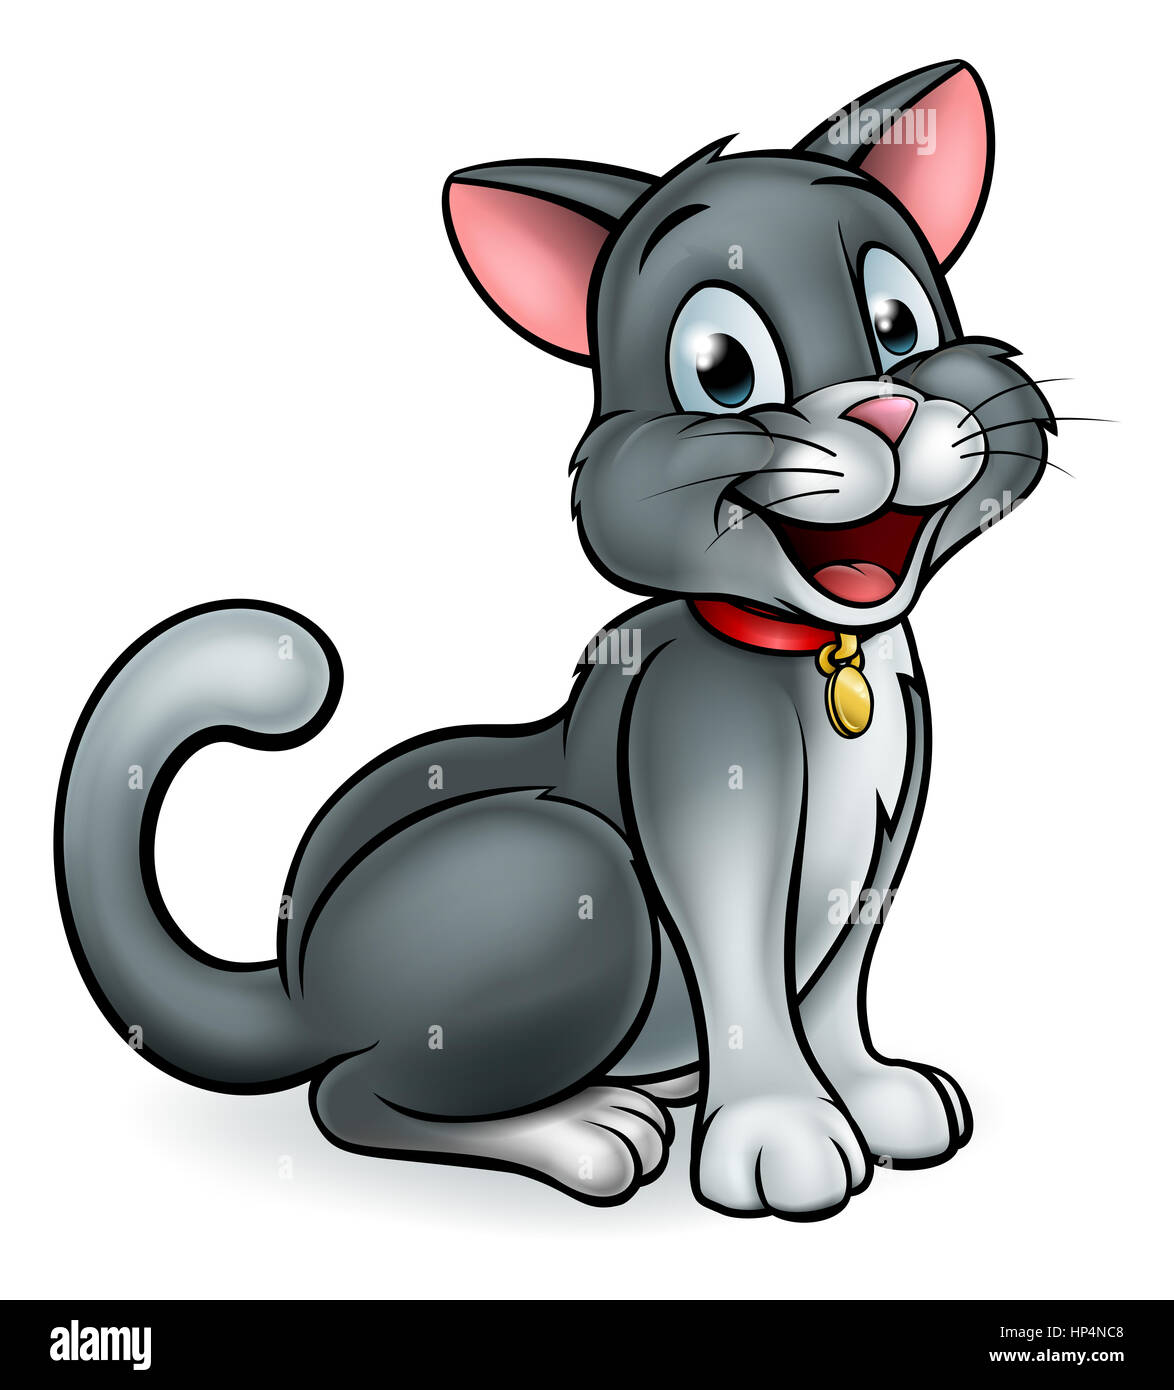 A Friendly cartoon cat mascot character Stock Photo - Alamy